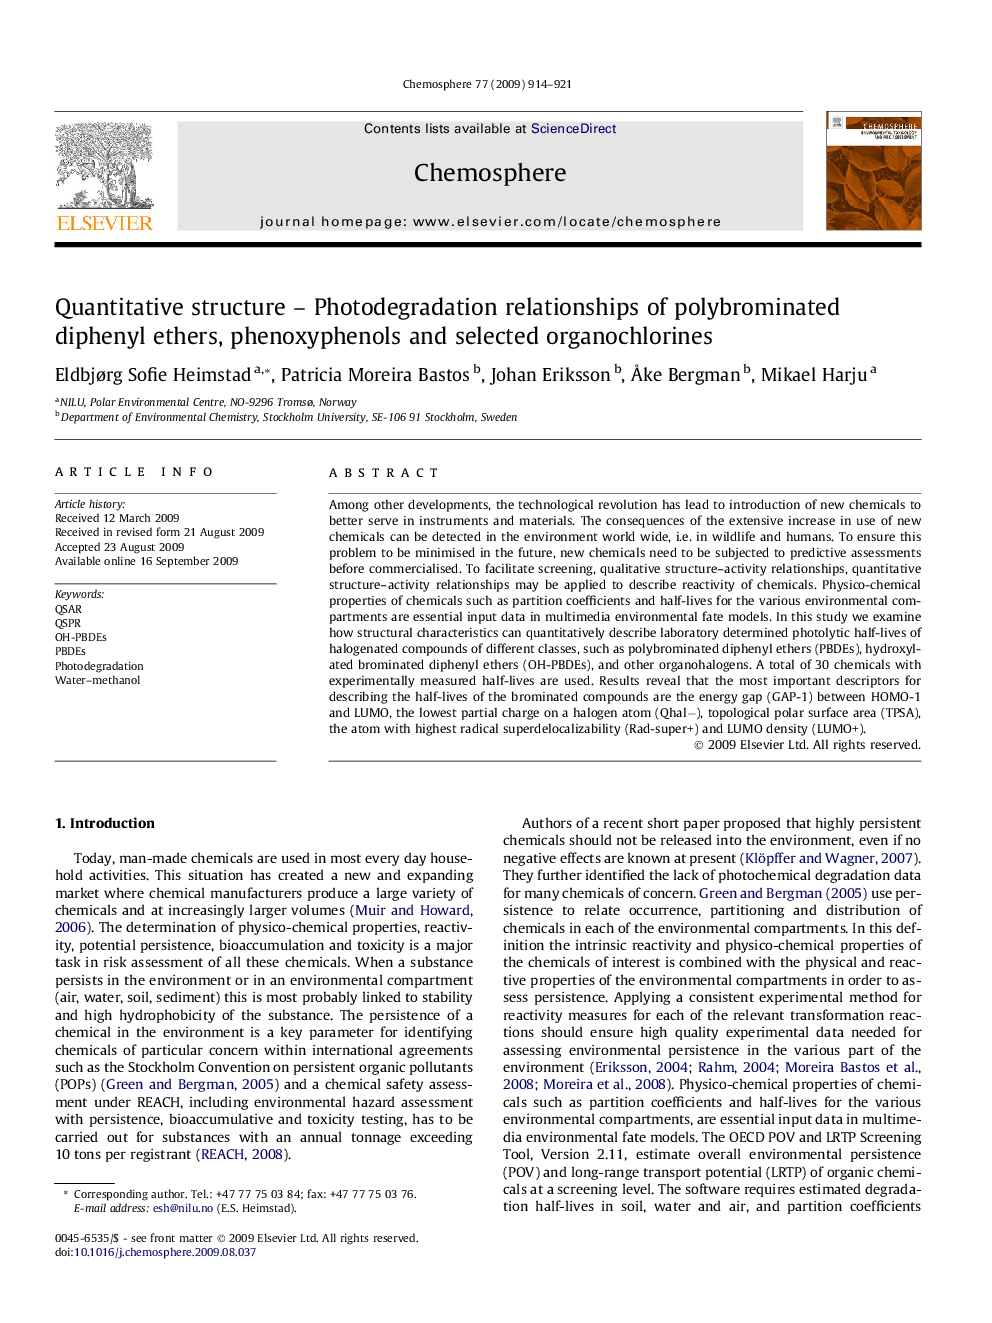 Quantitative structure – Photodegradation relationships of polybrominated diphenyl ethers, phenoxyphenols and selected organochlorines